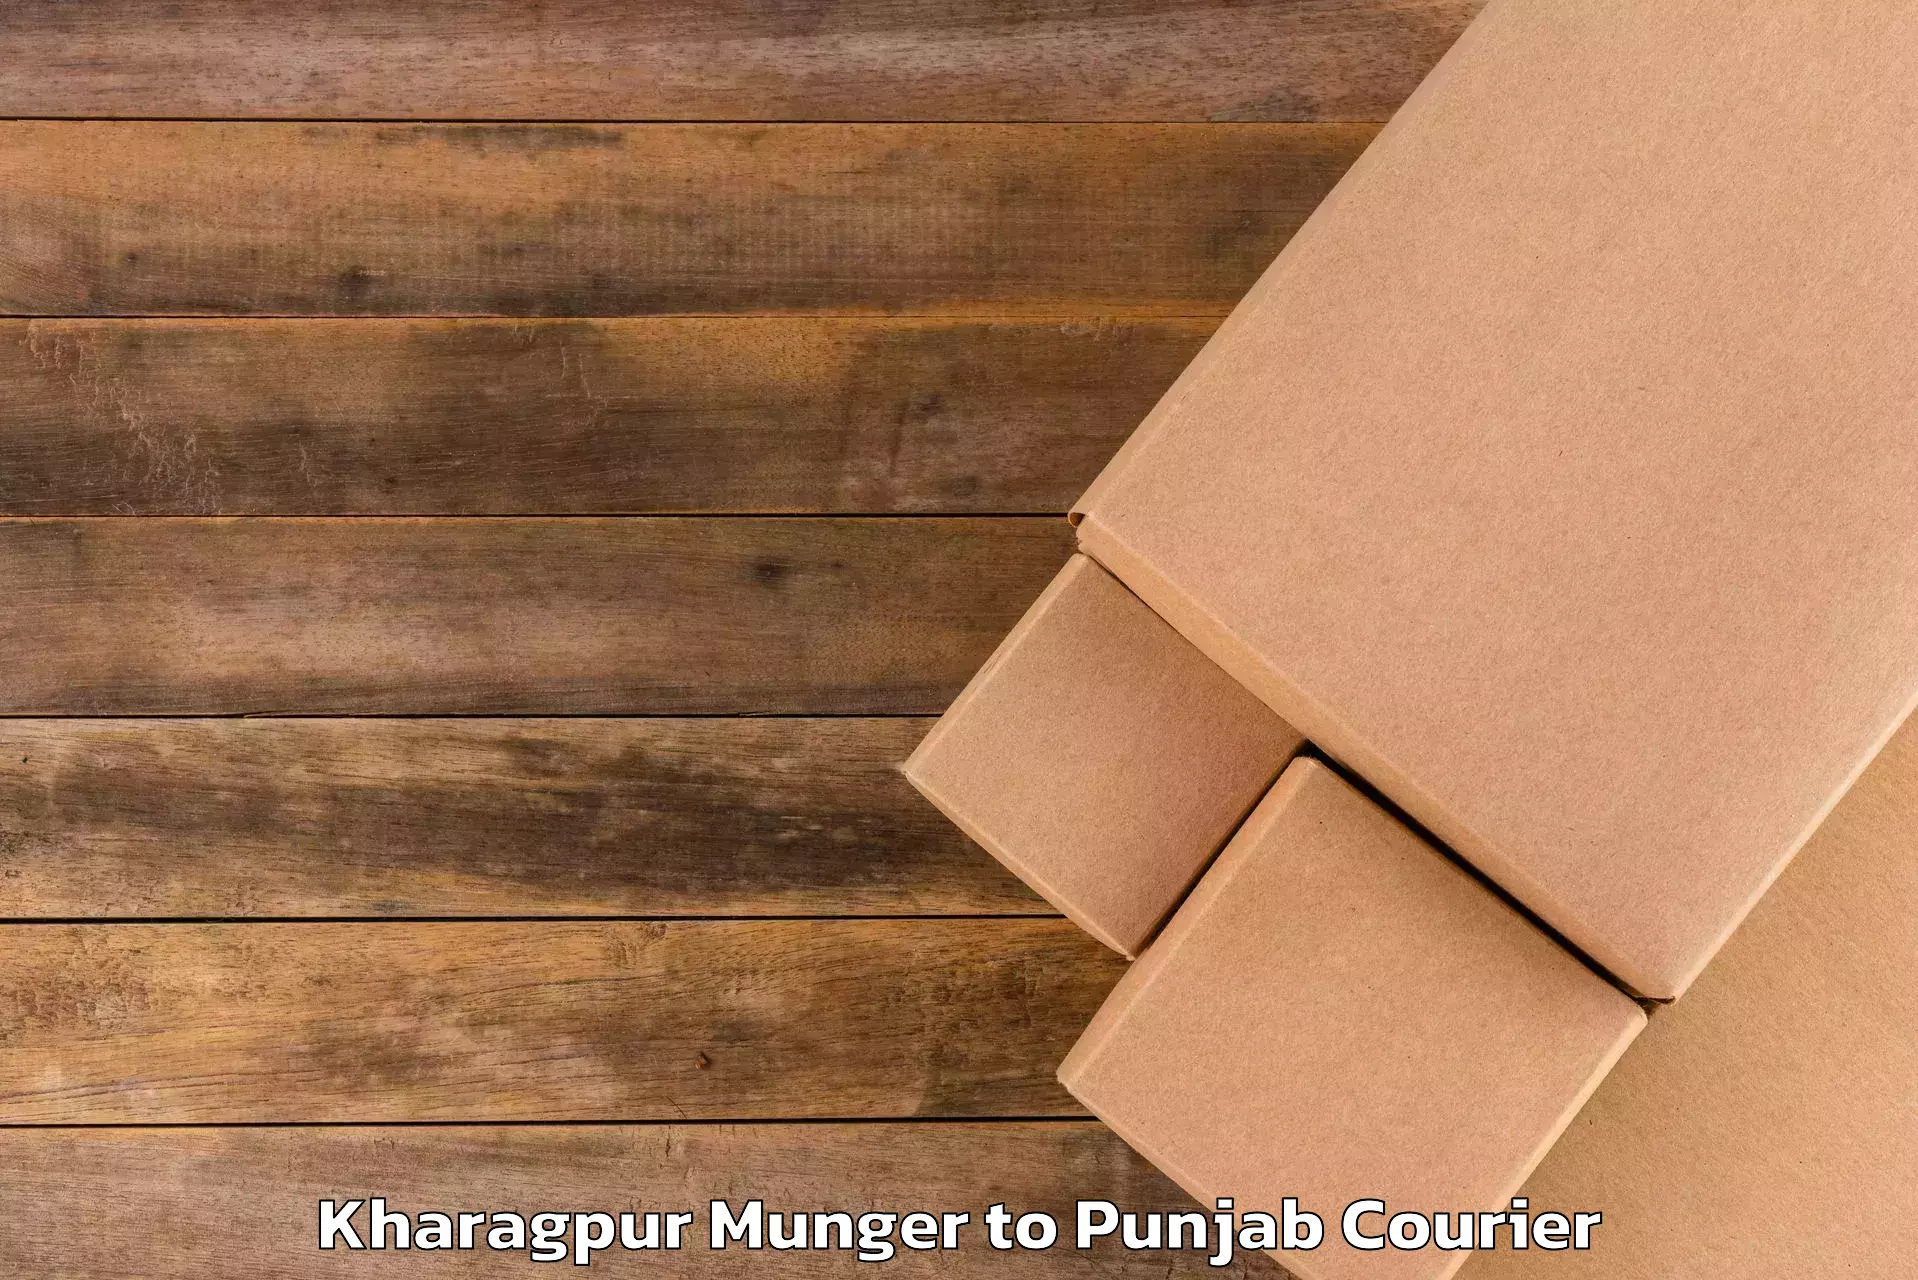 Baggage relocation service Kharagpur Munger to Goindwal Sahib